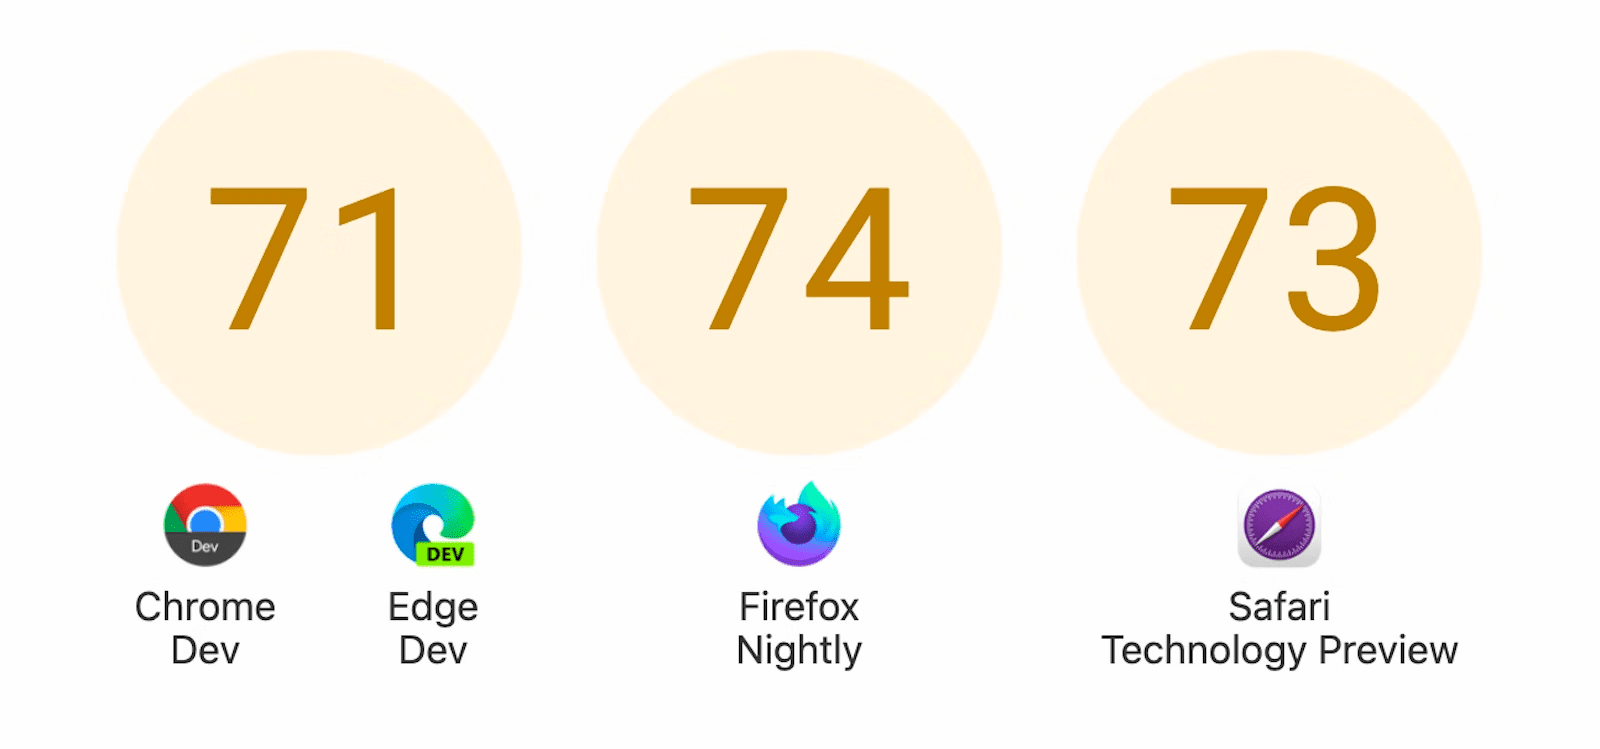 Показаны три круга с оценками: 71 для Chrome Dev и Edge Dev, 74 для Firefox Nightly и 73 для Safari Technology Preview.